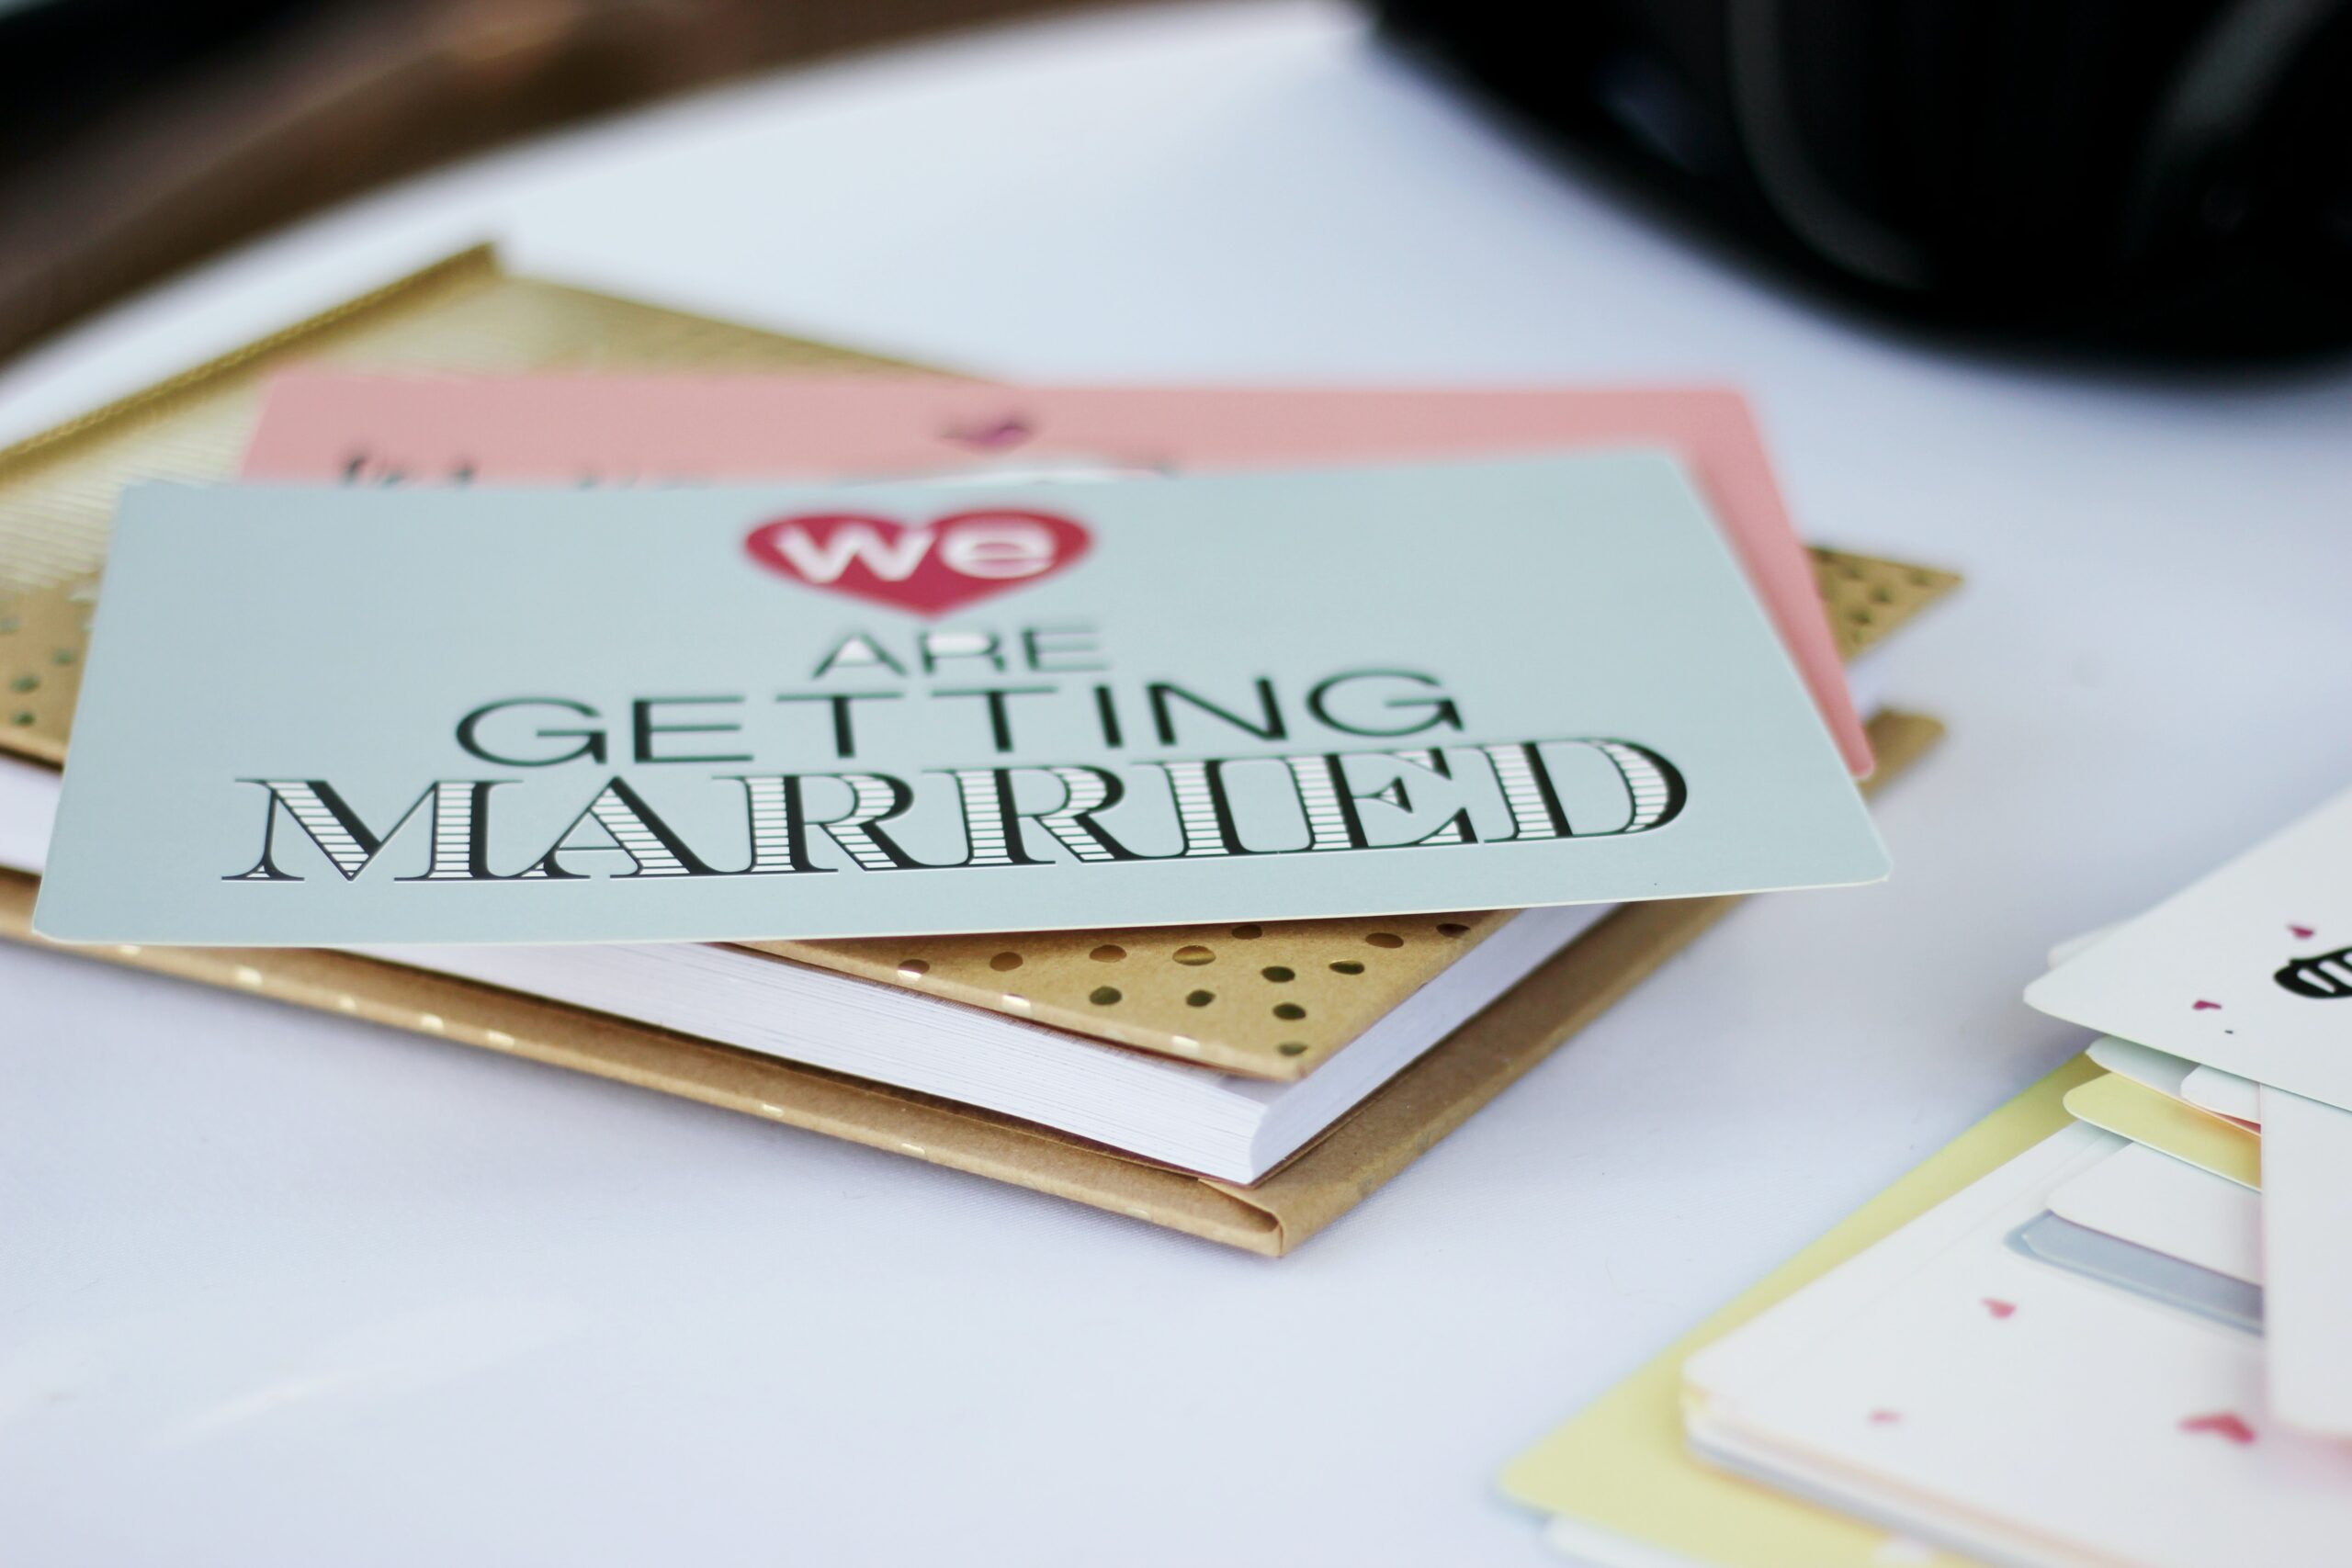 QR Codes on wedding invitations